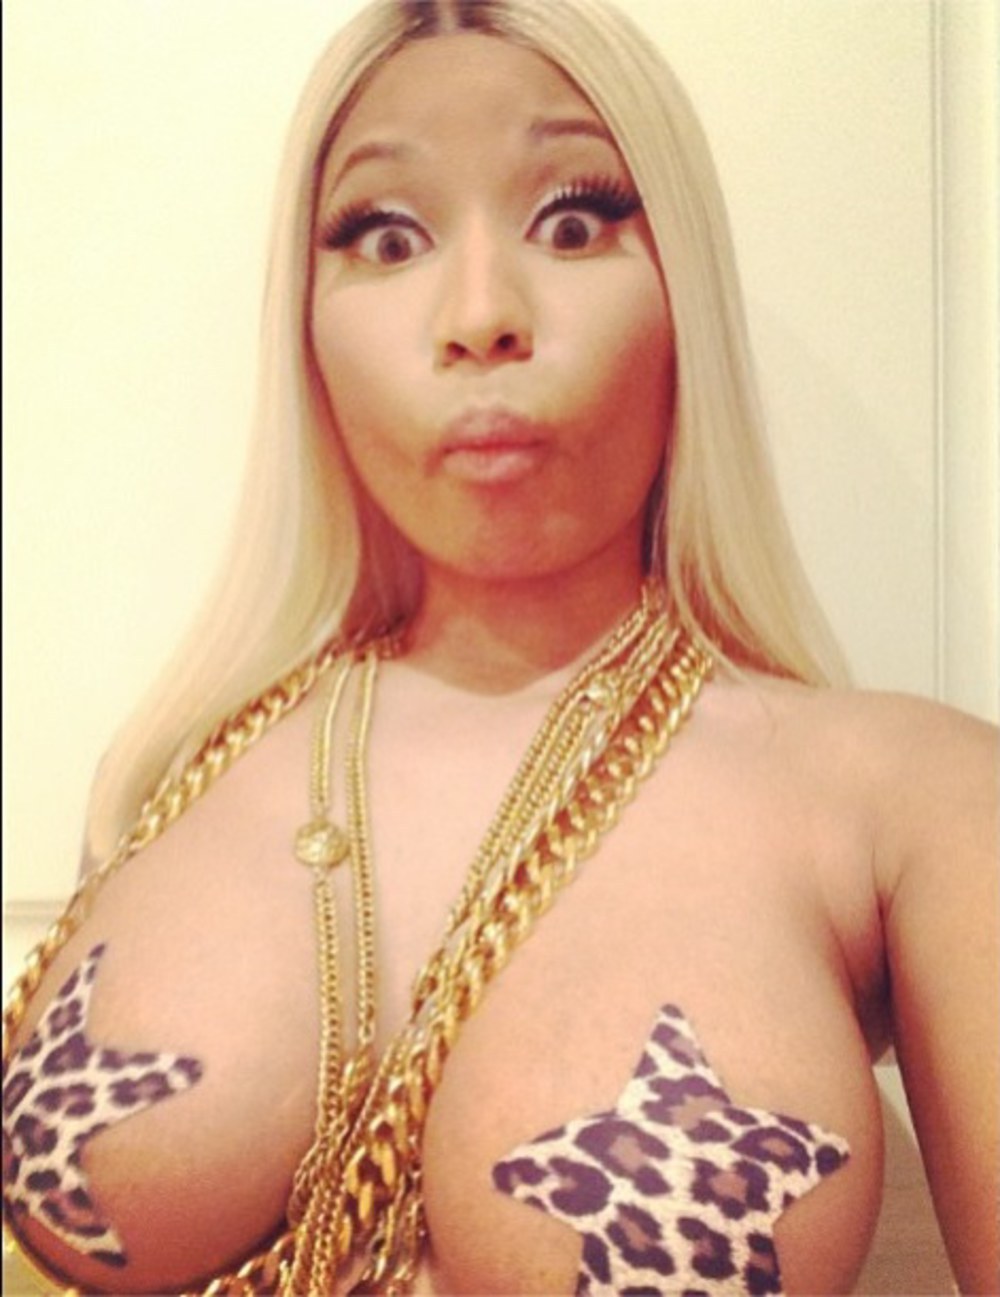 Nicki minaj breast pop out